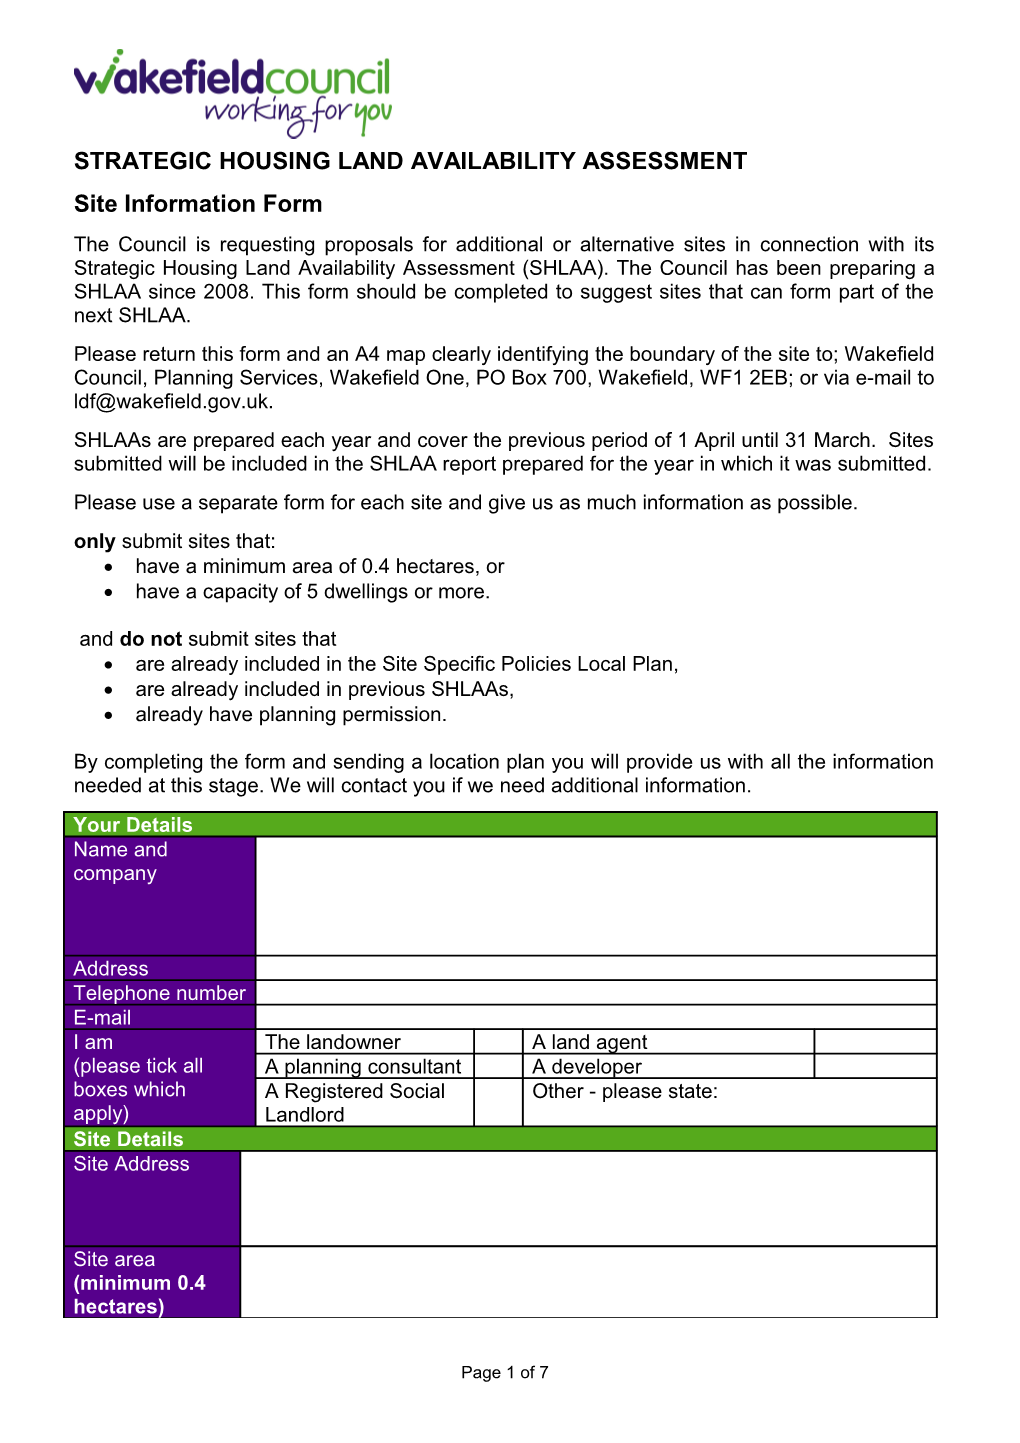 Strategic Housing Land Availability Assessment (SHLAA) 2015 Site Information Form